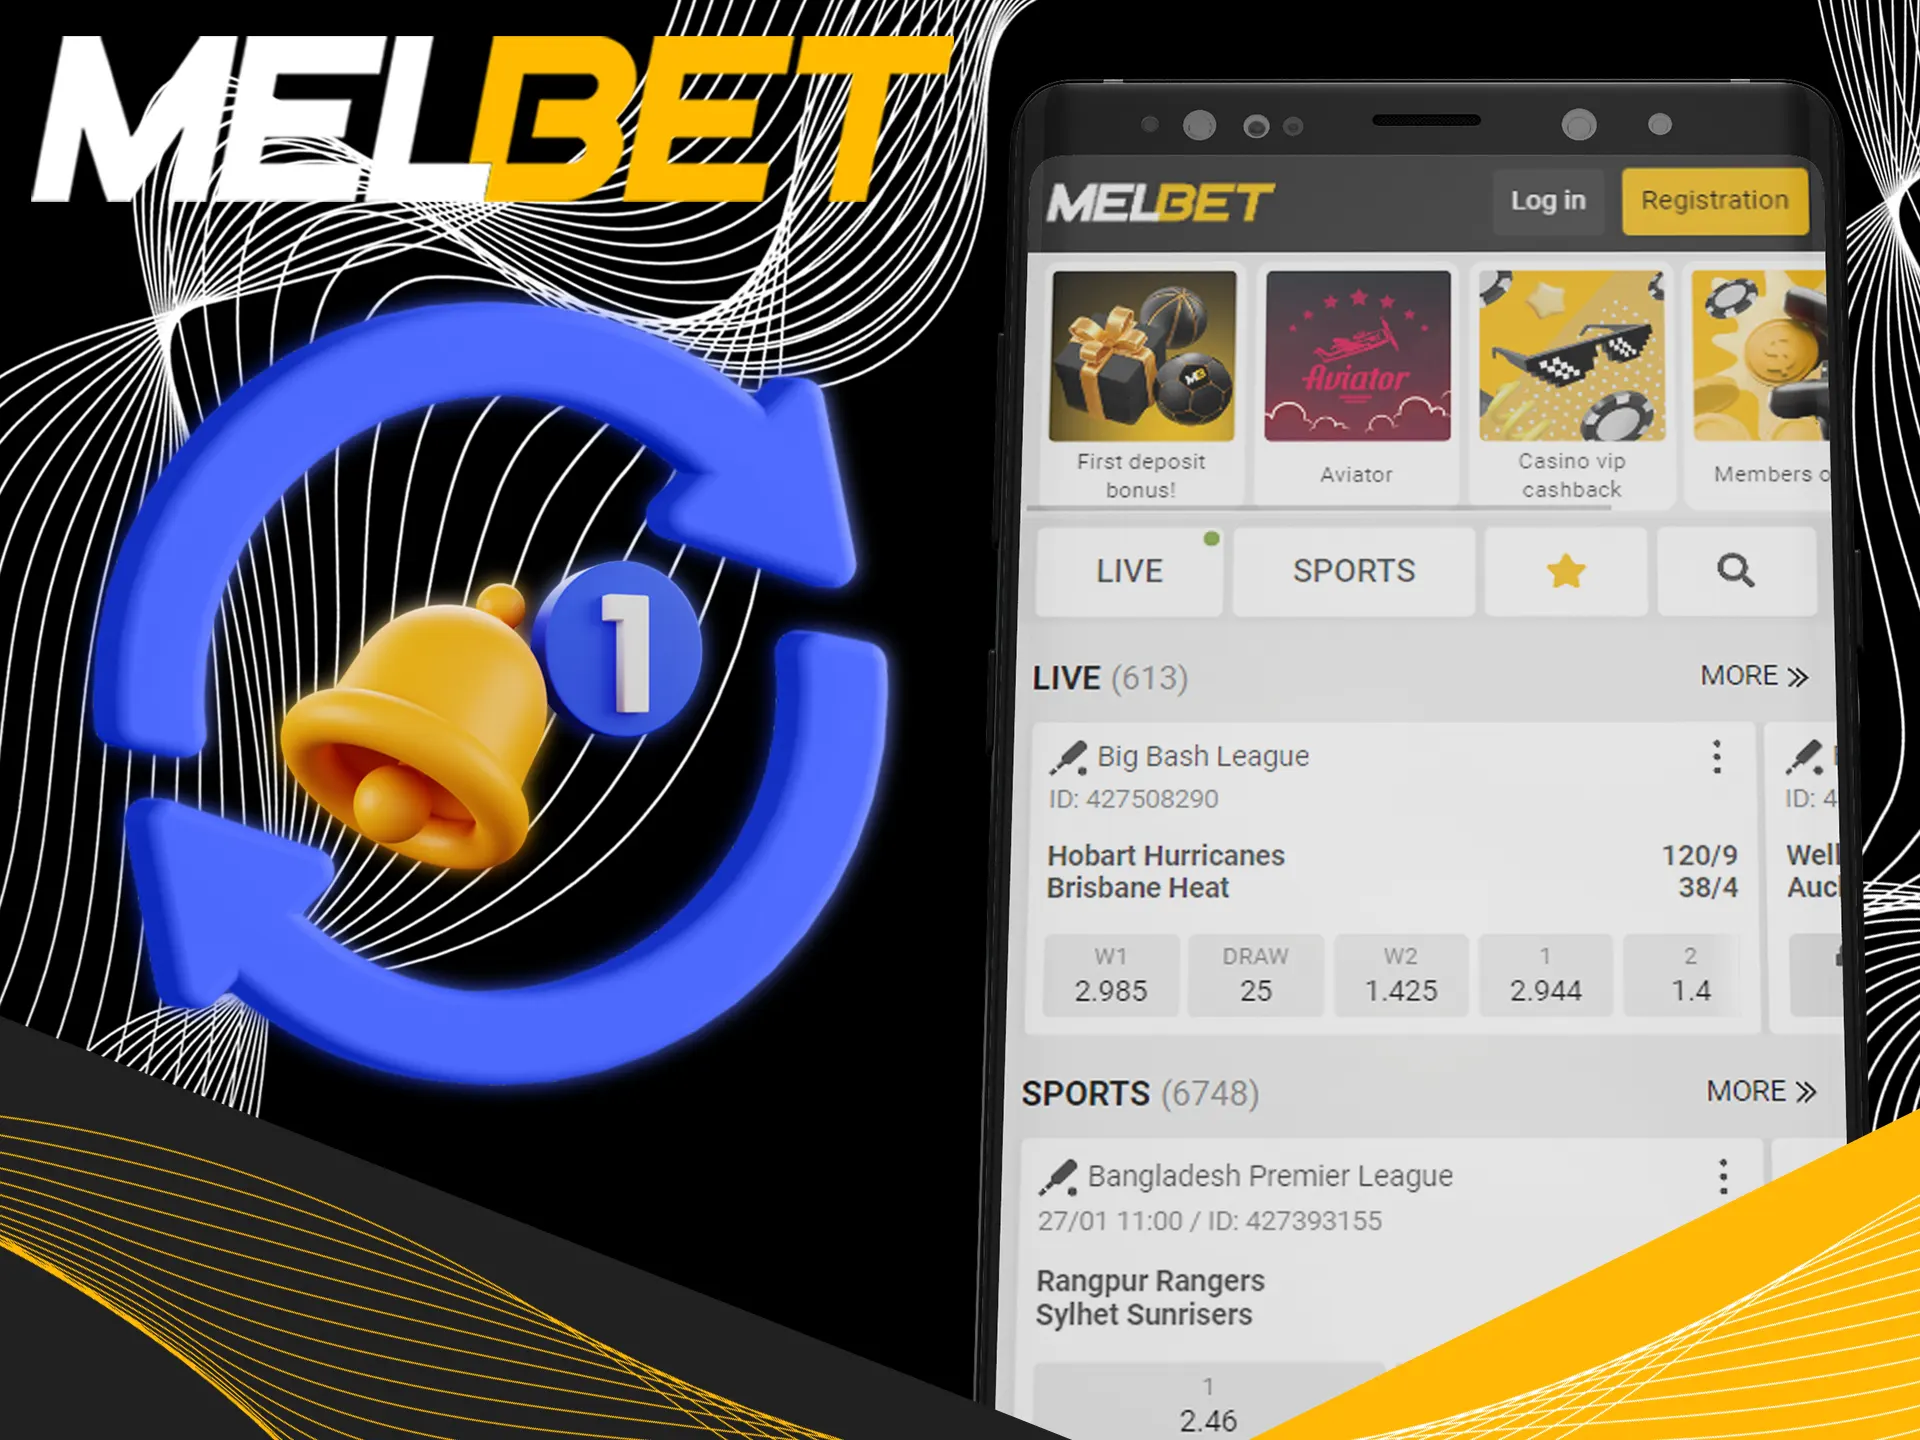 Download update on Melbet app by logging in.